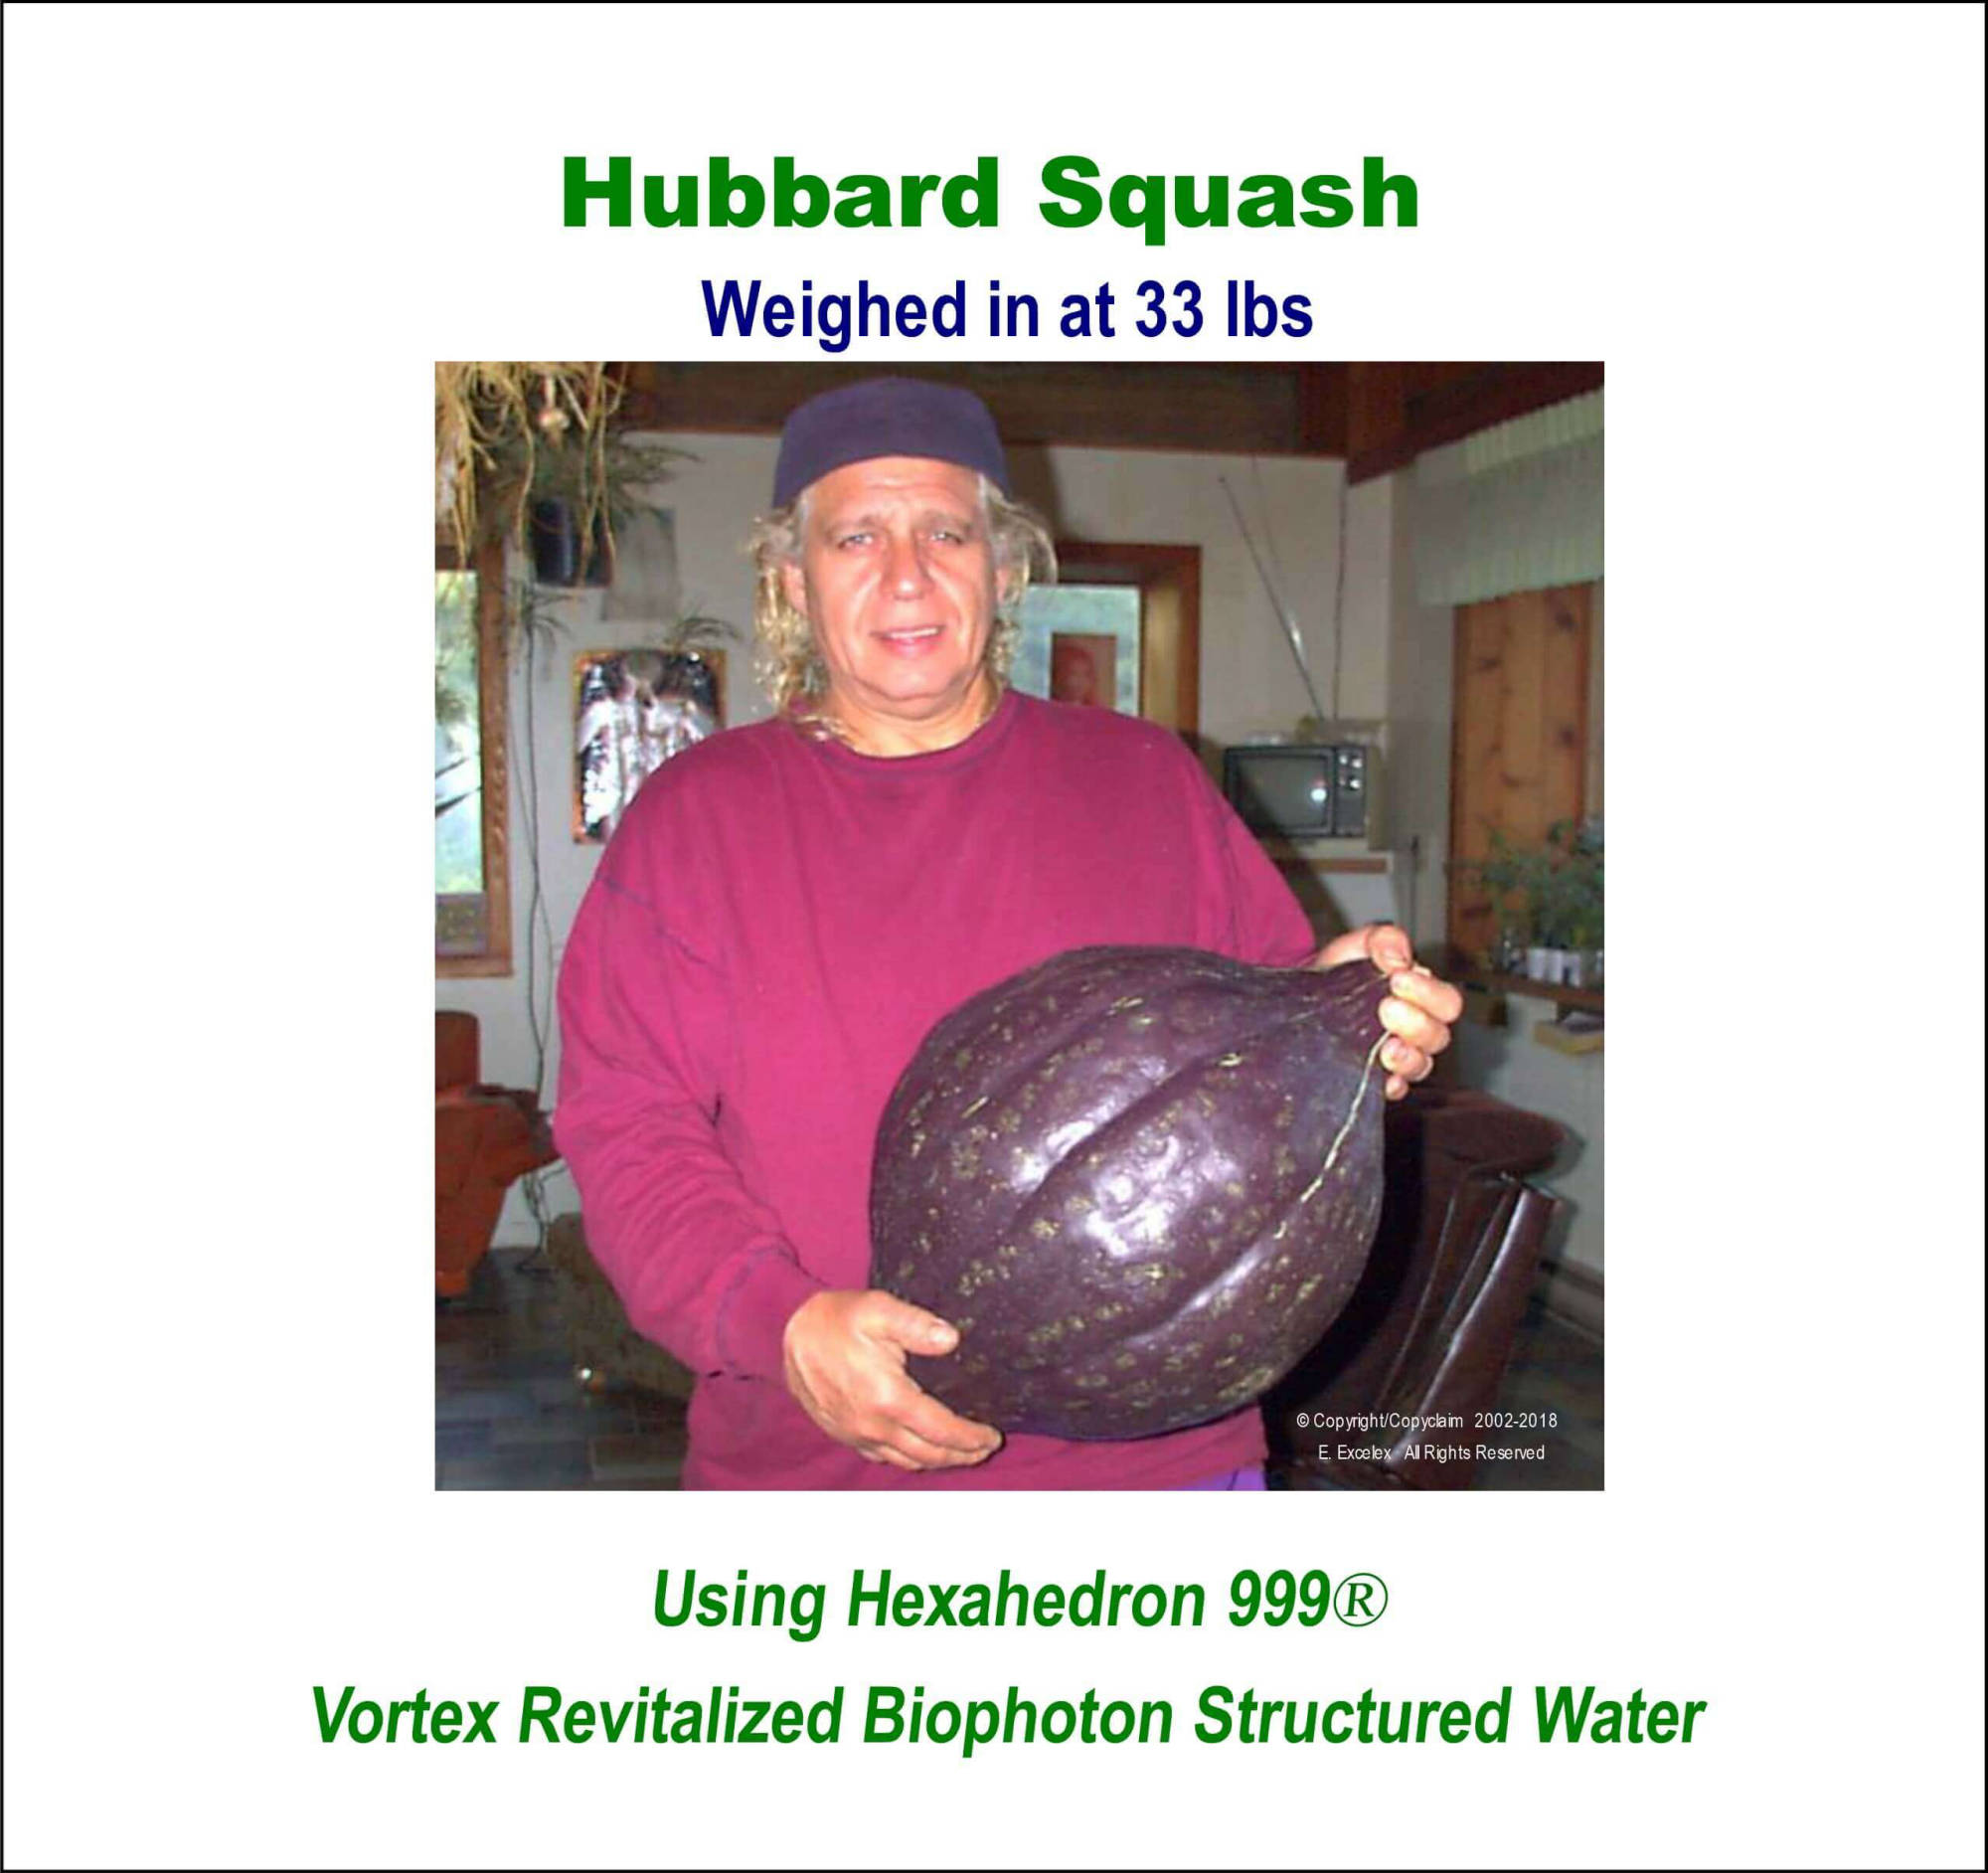 Hubbard Squash using Hexahedron 999 Vortex Revitalized Structured Biophoton Water